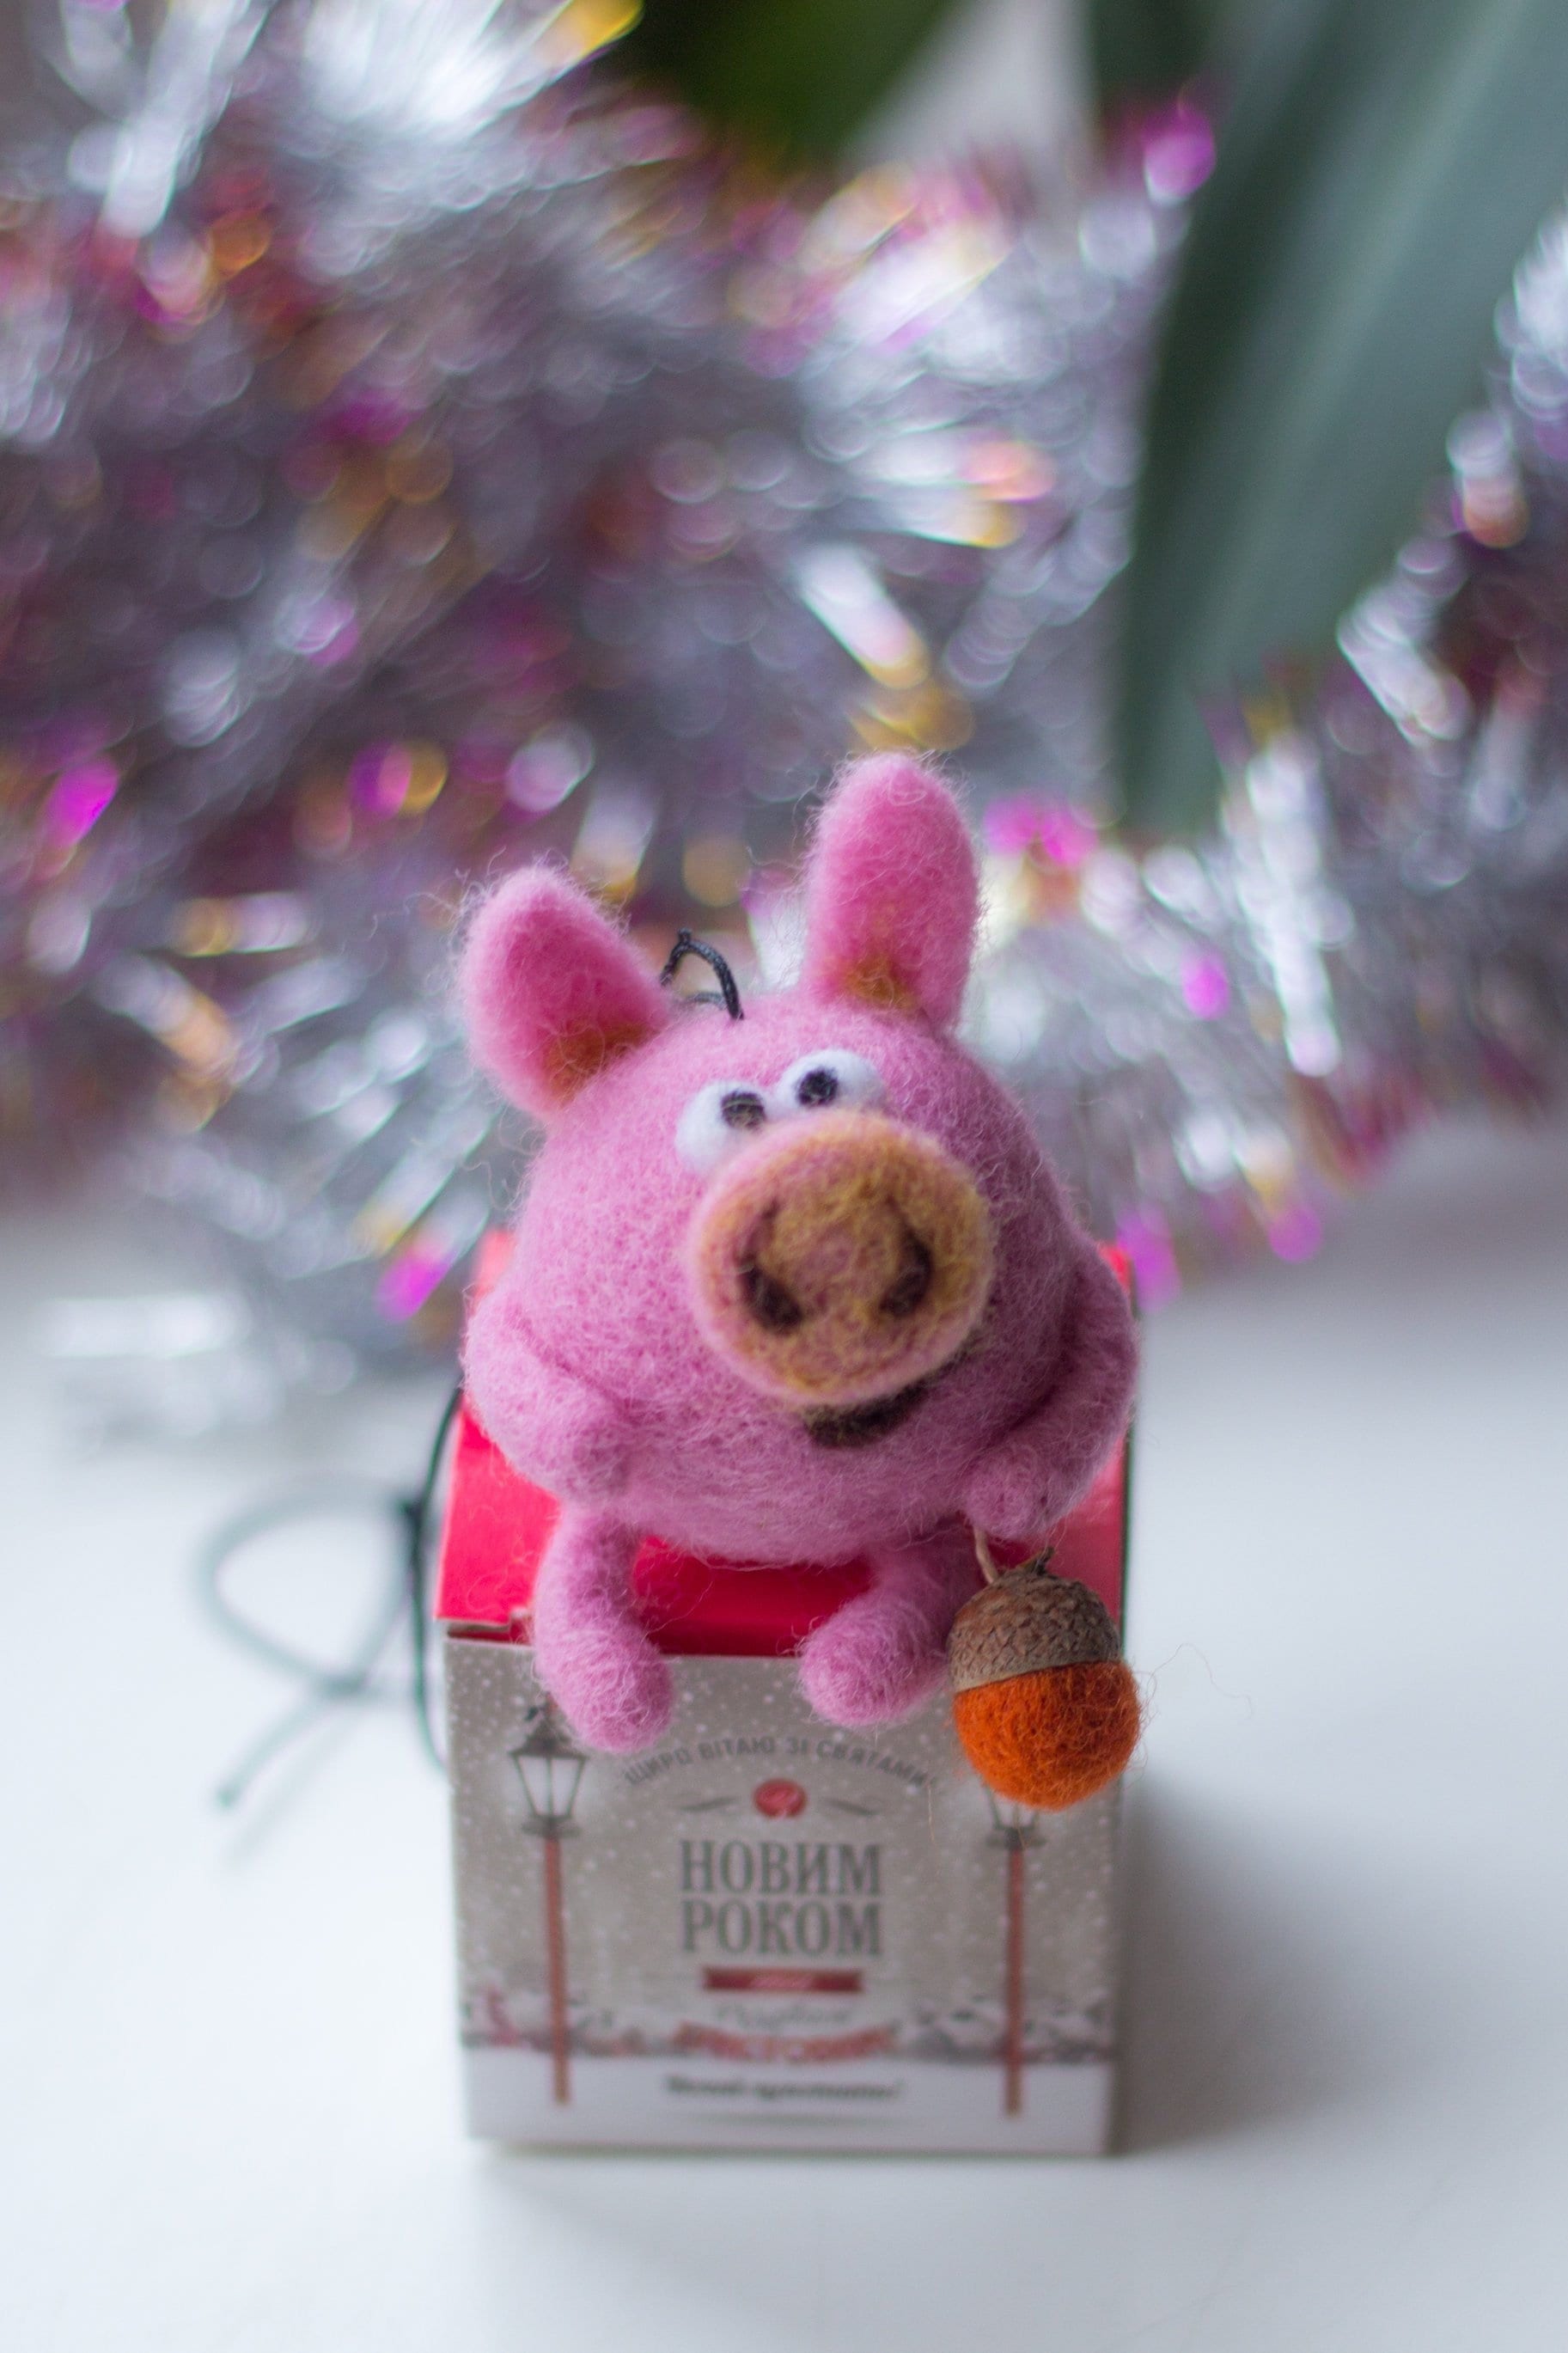 Wool pig ornament